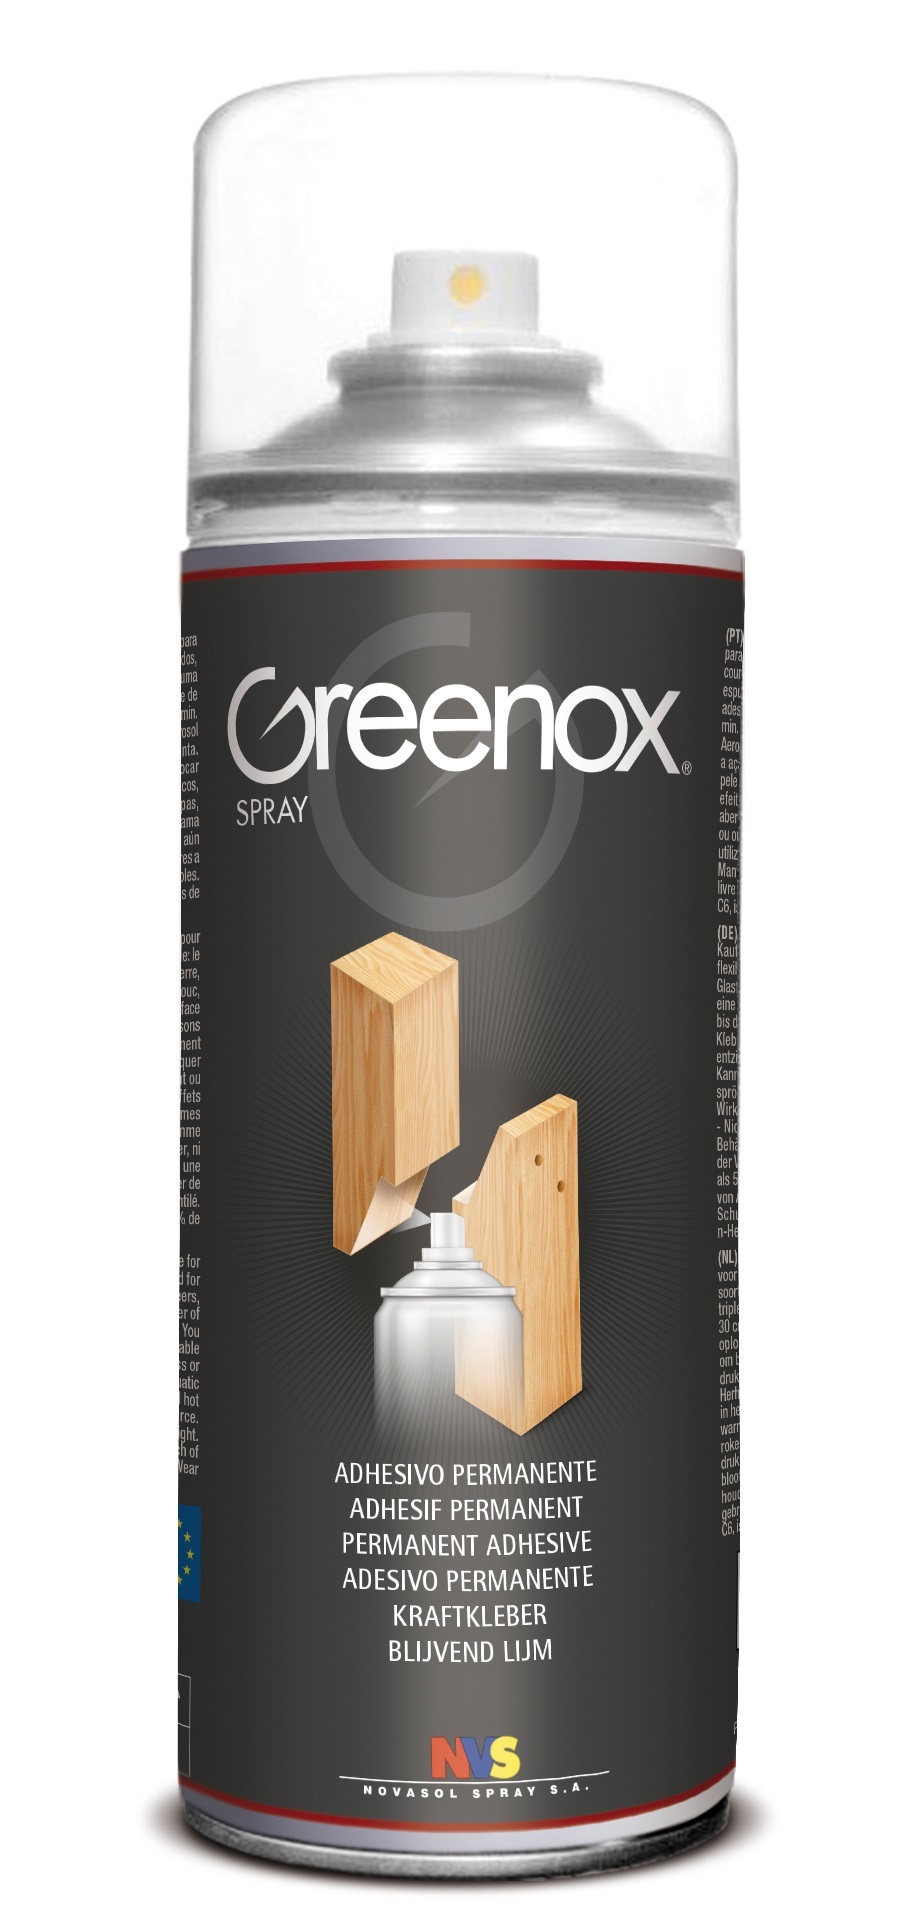 Novasol Spray - Greenox - Permanent Adhesive Spray - 400ml